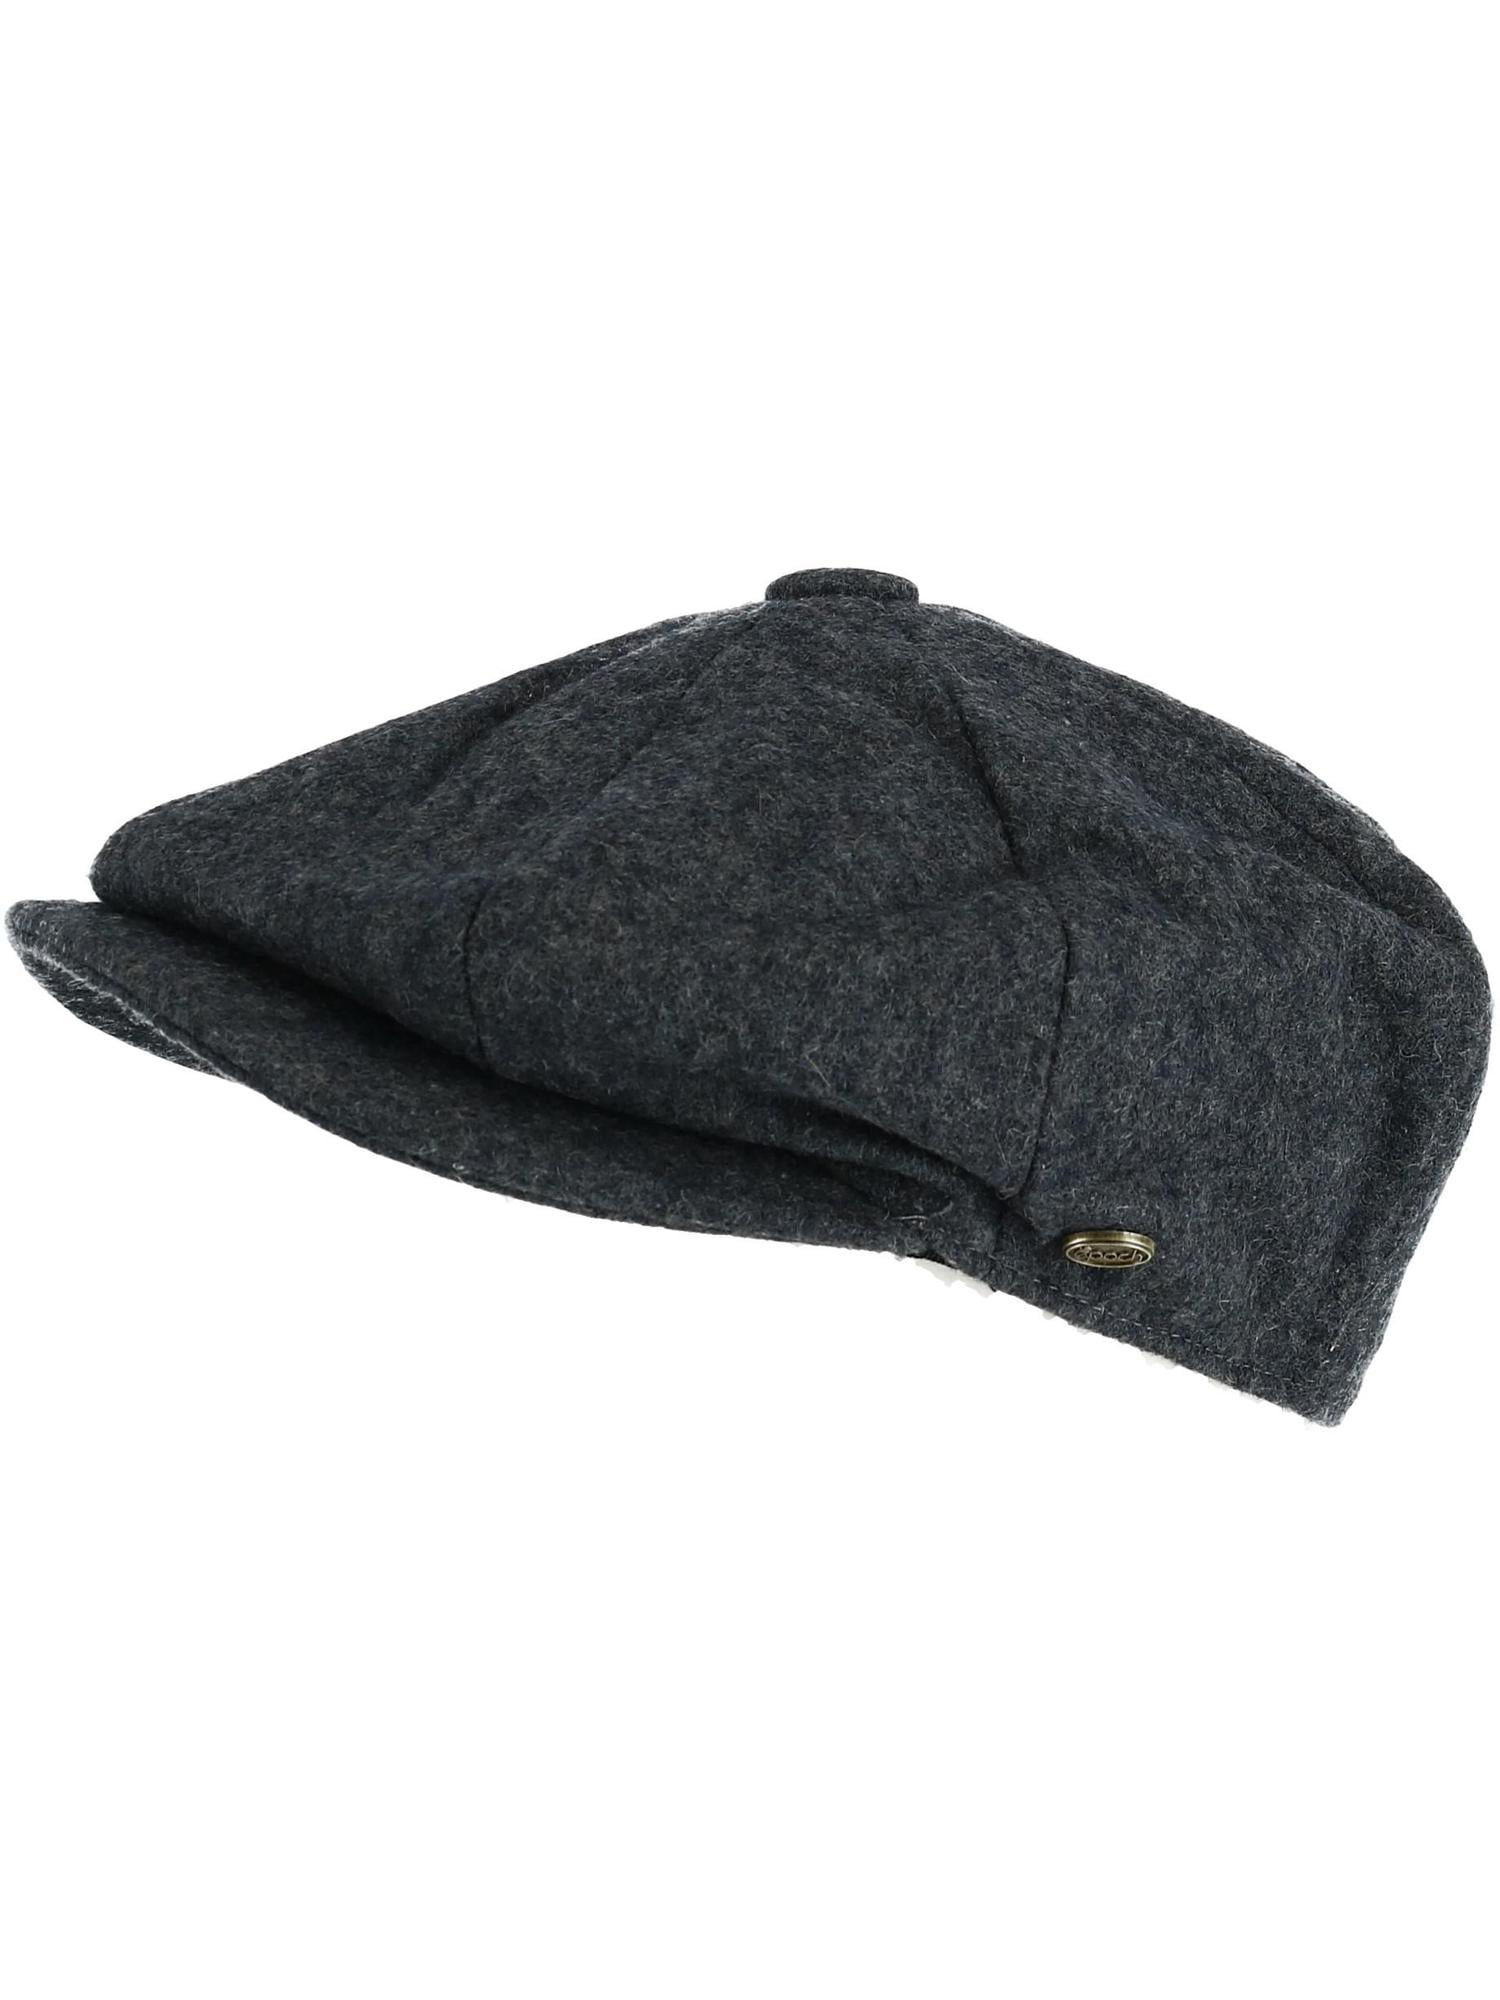 Epoch Hats - Epoch Hats Company Melton Wool 8 Quarter Newsboy Cap (Men ...